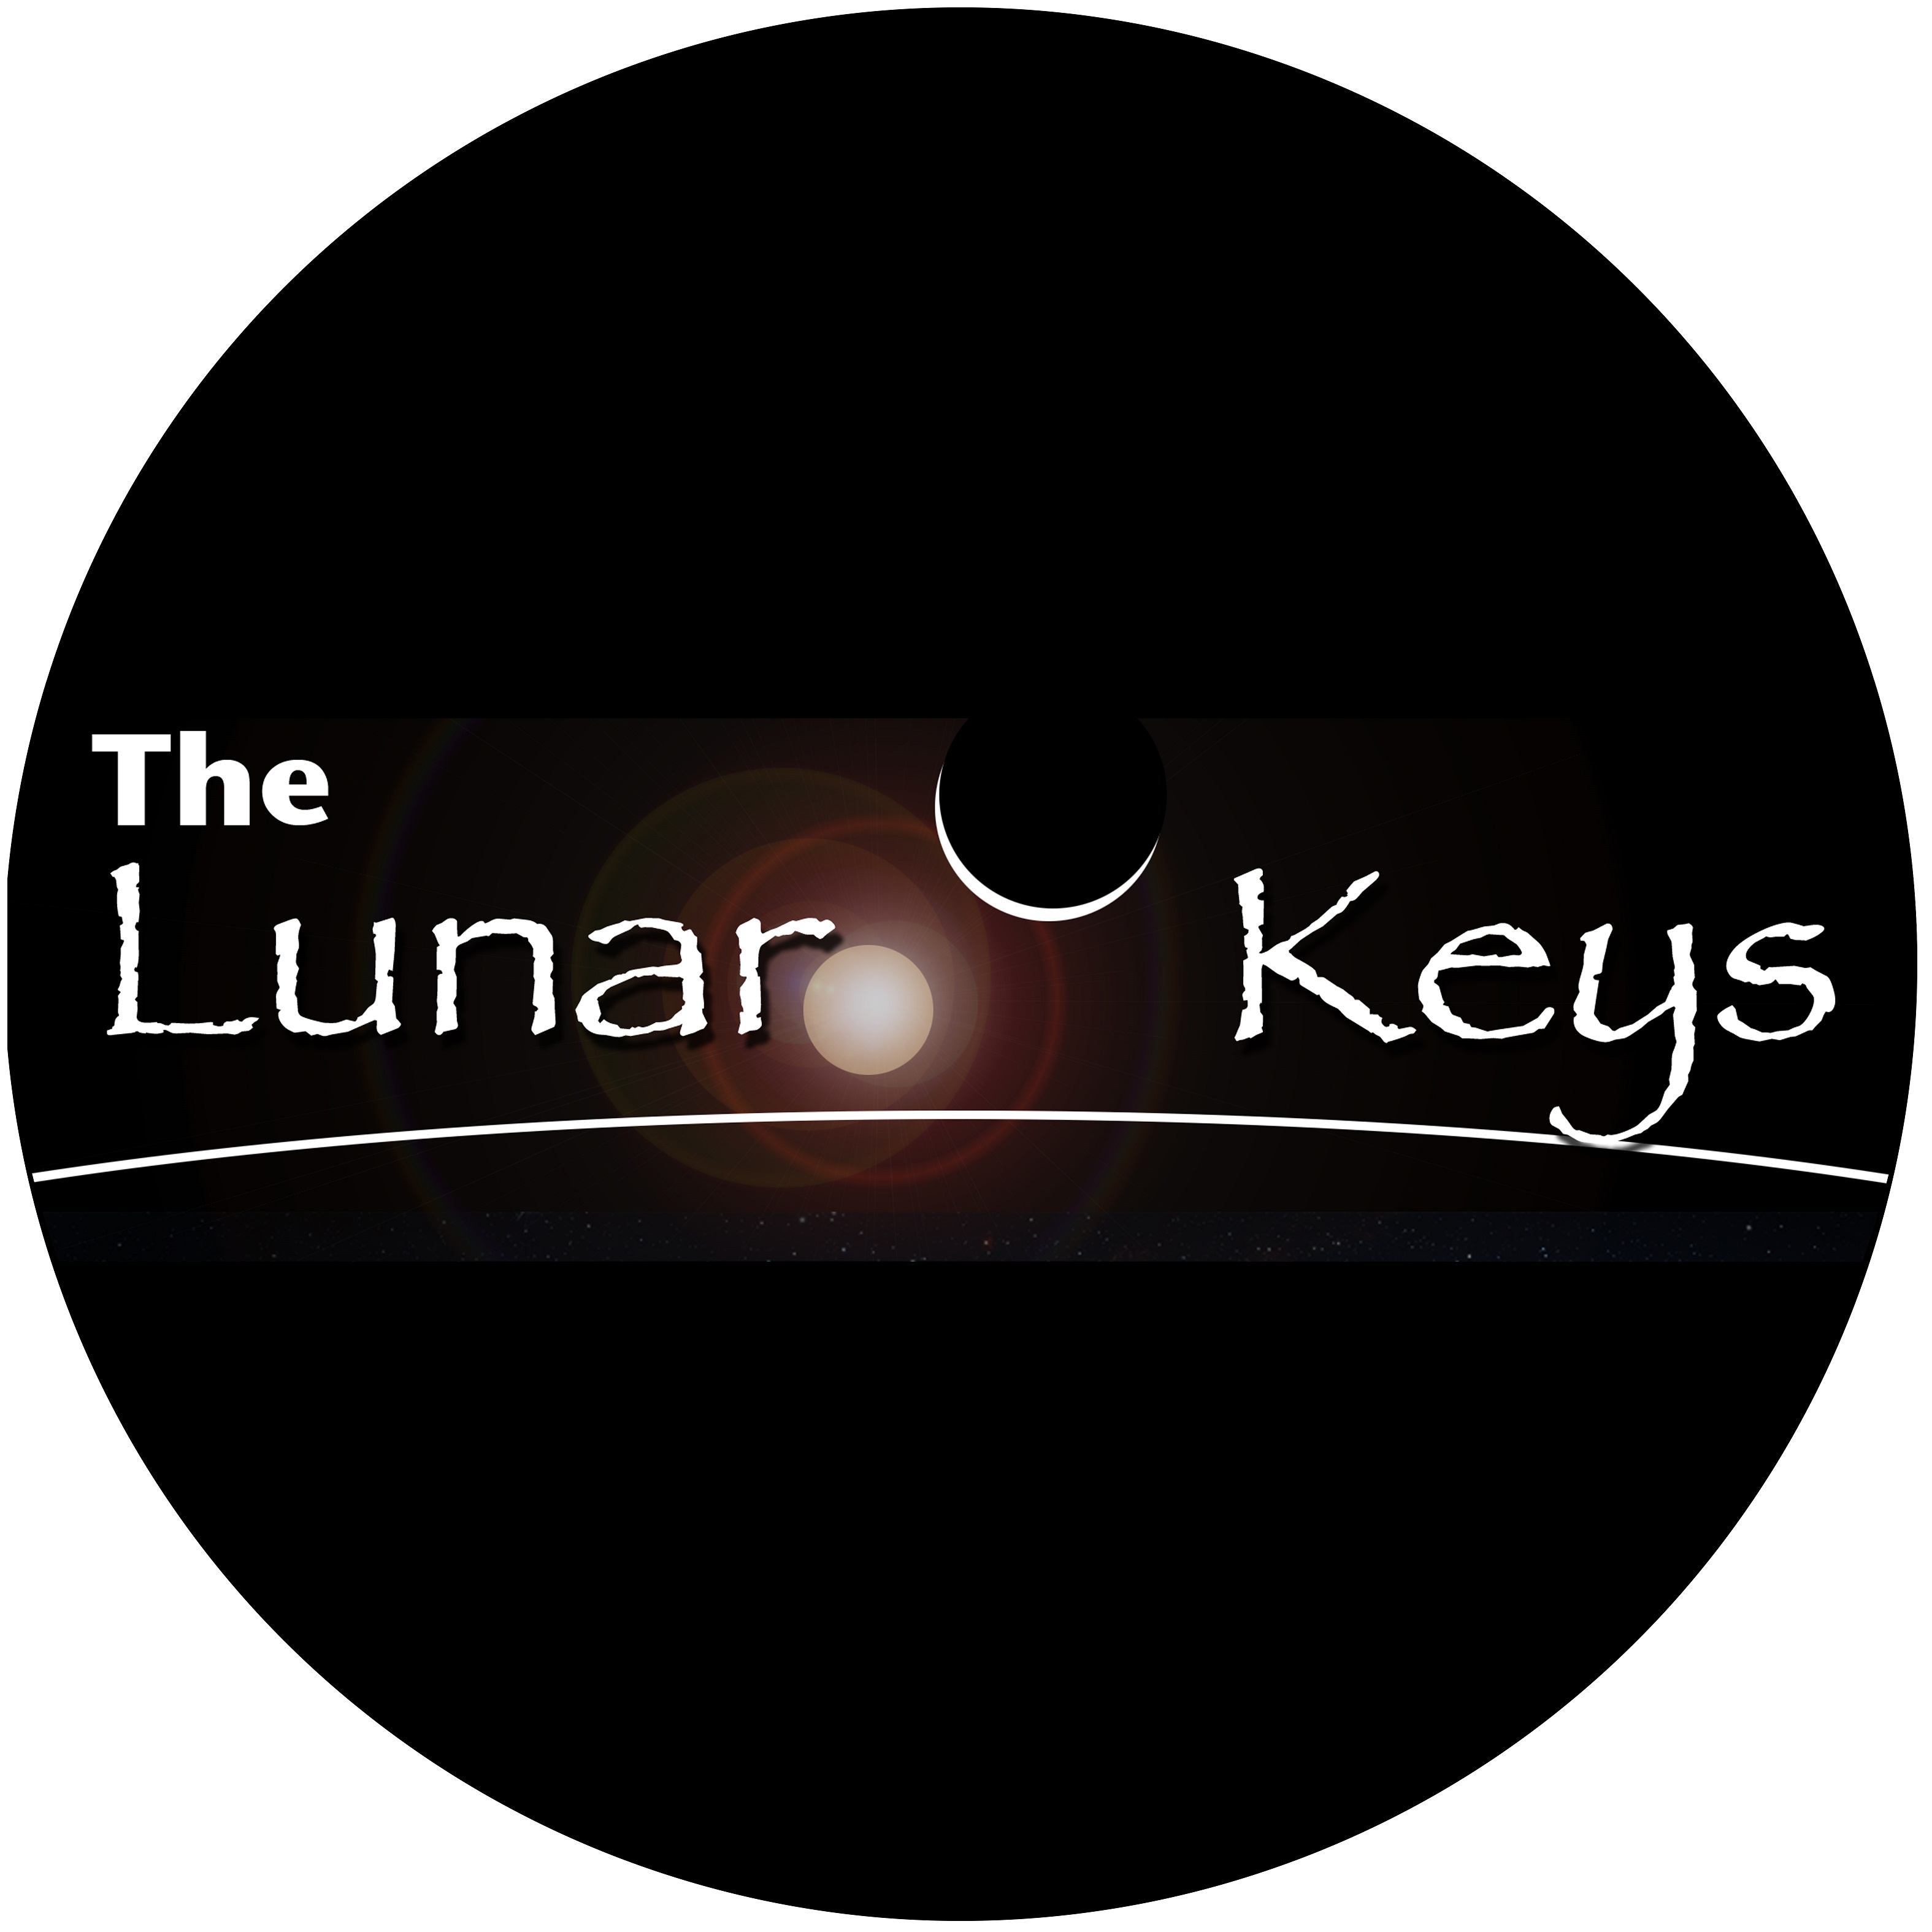 The Lunar Keys